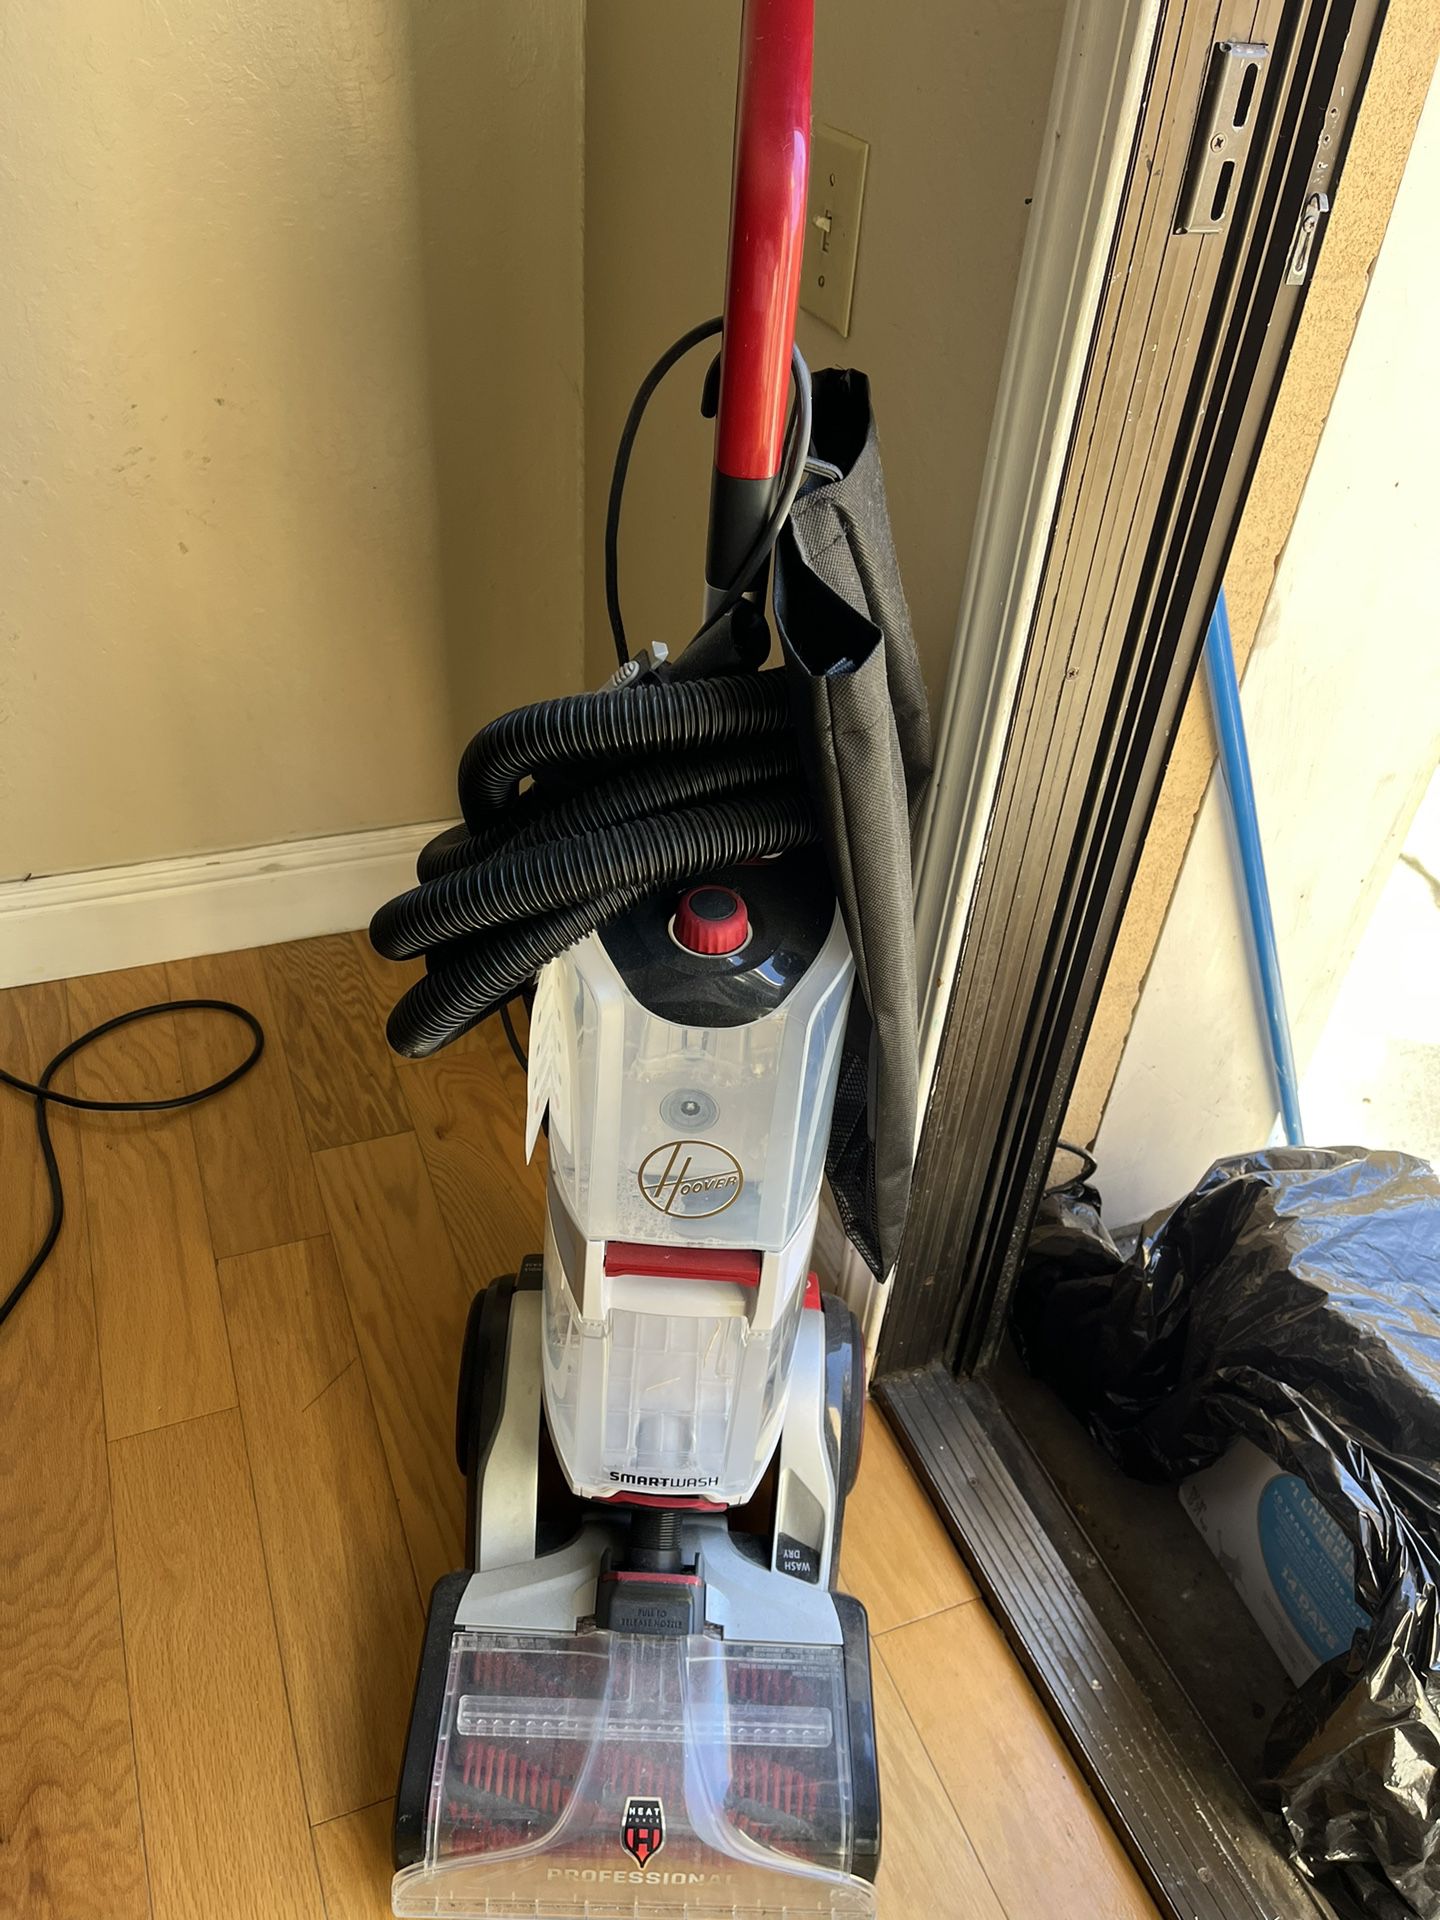 Hoover Carpet cleaning Vacuum 